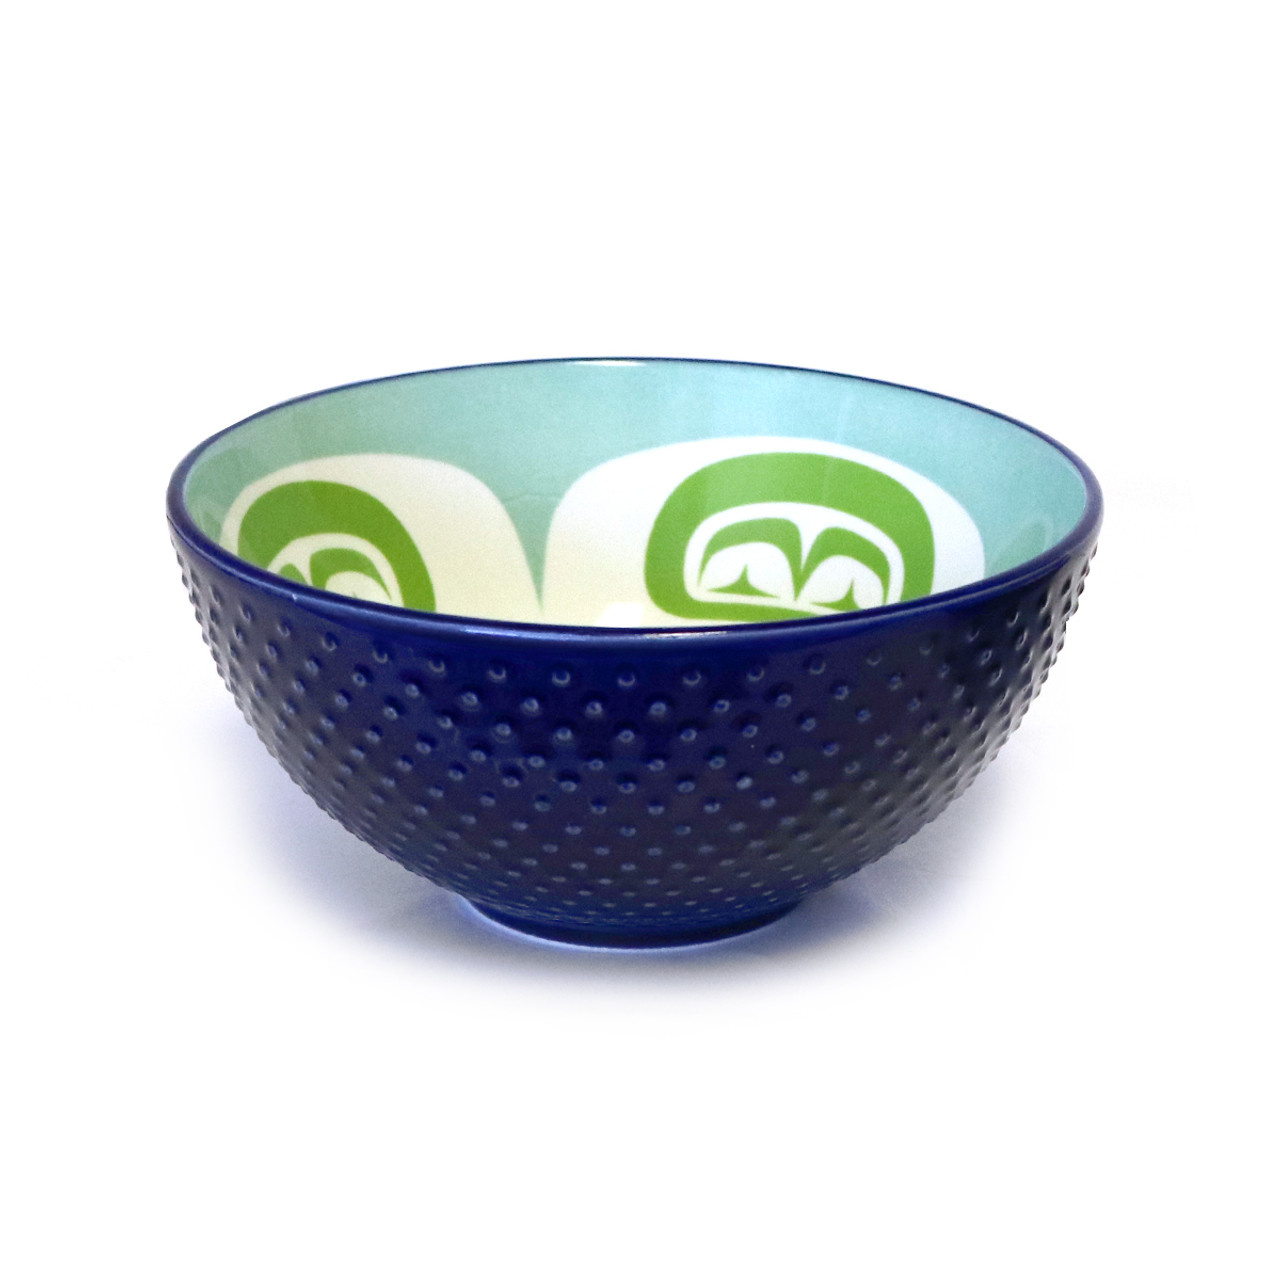 Porcelain Art Bowl - Moon